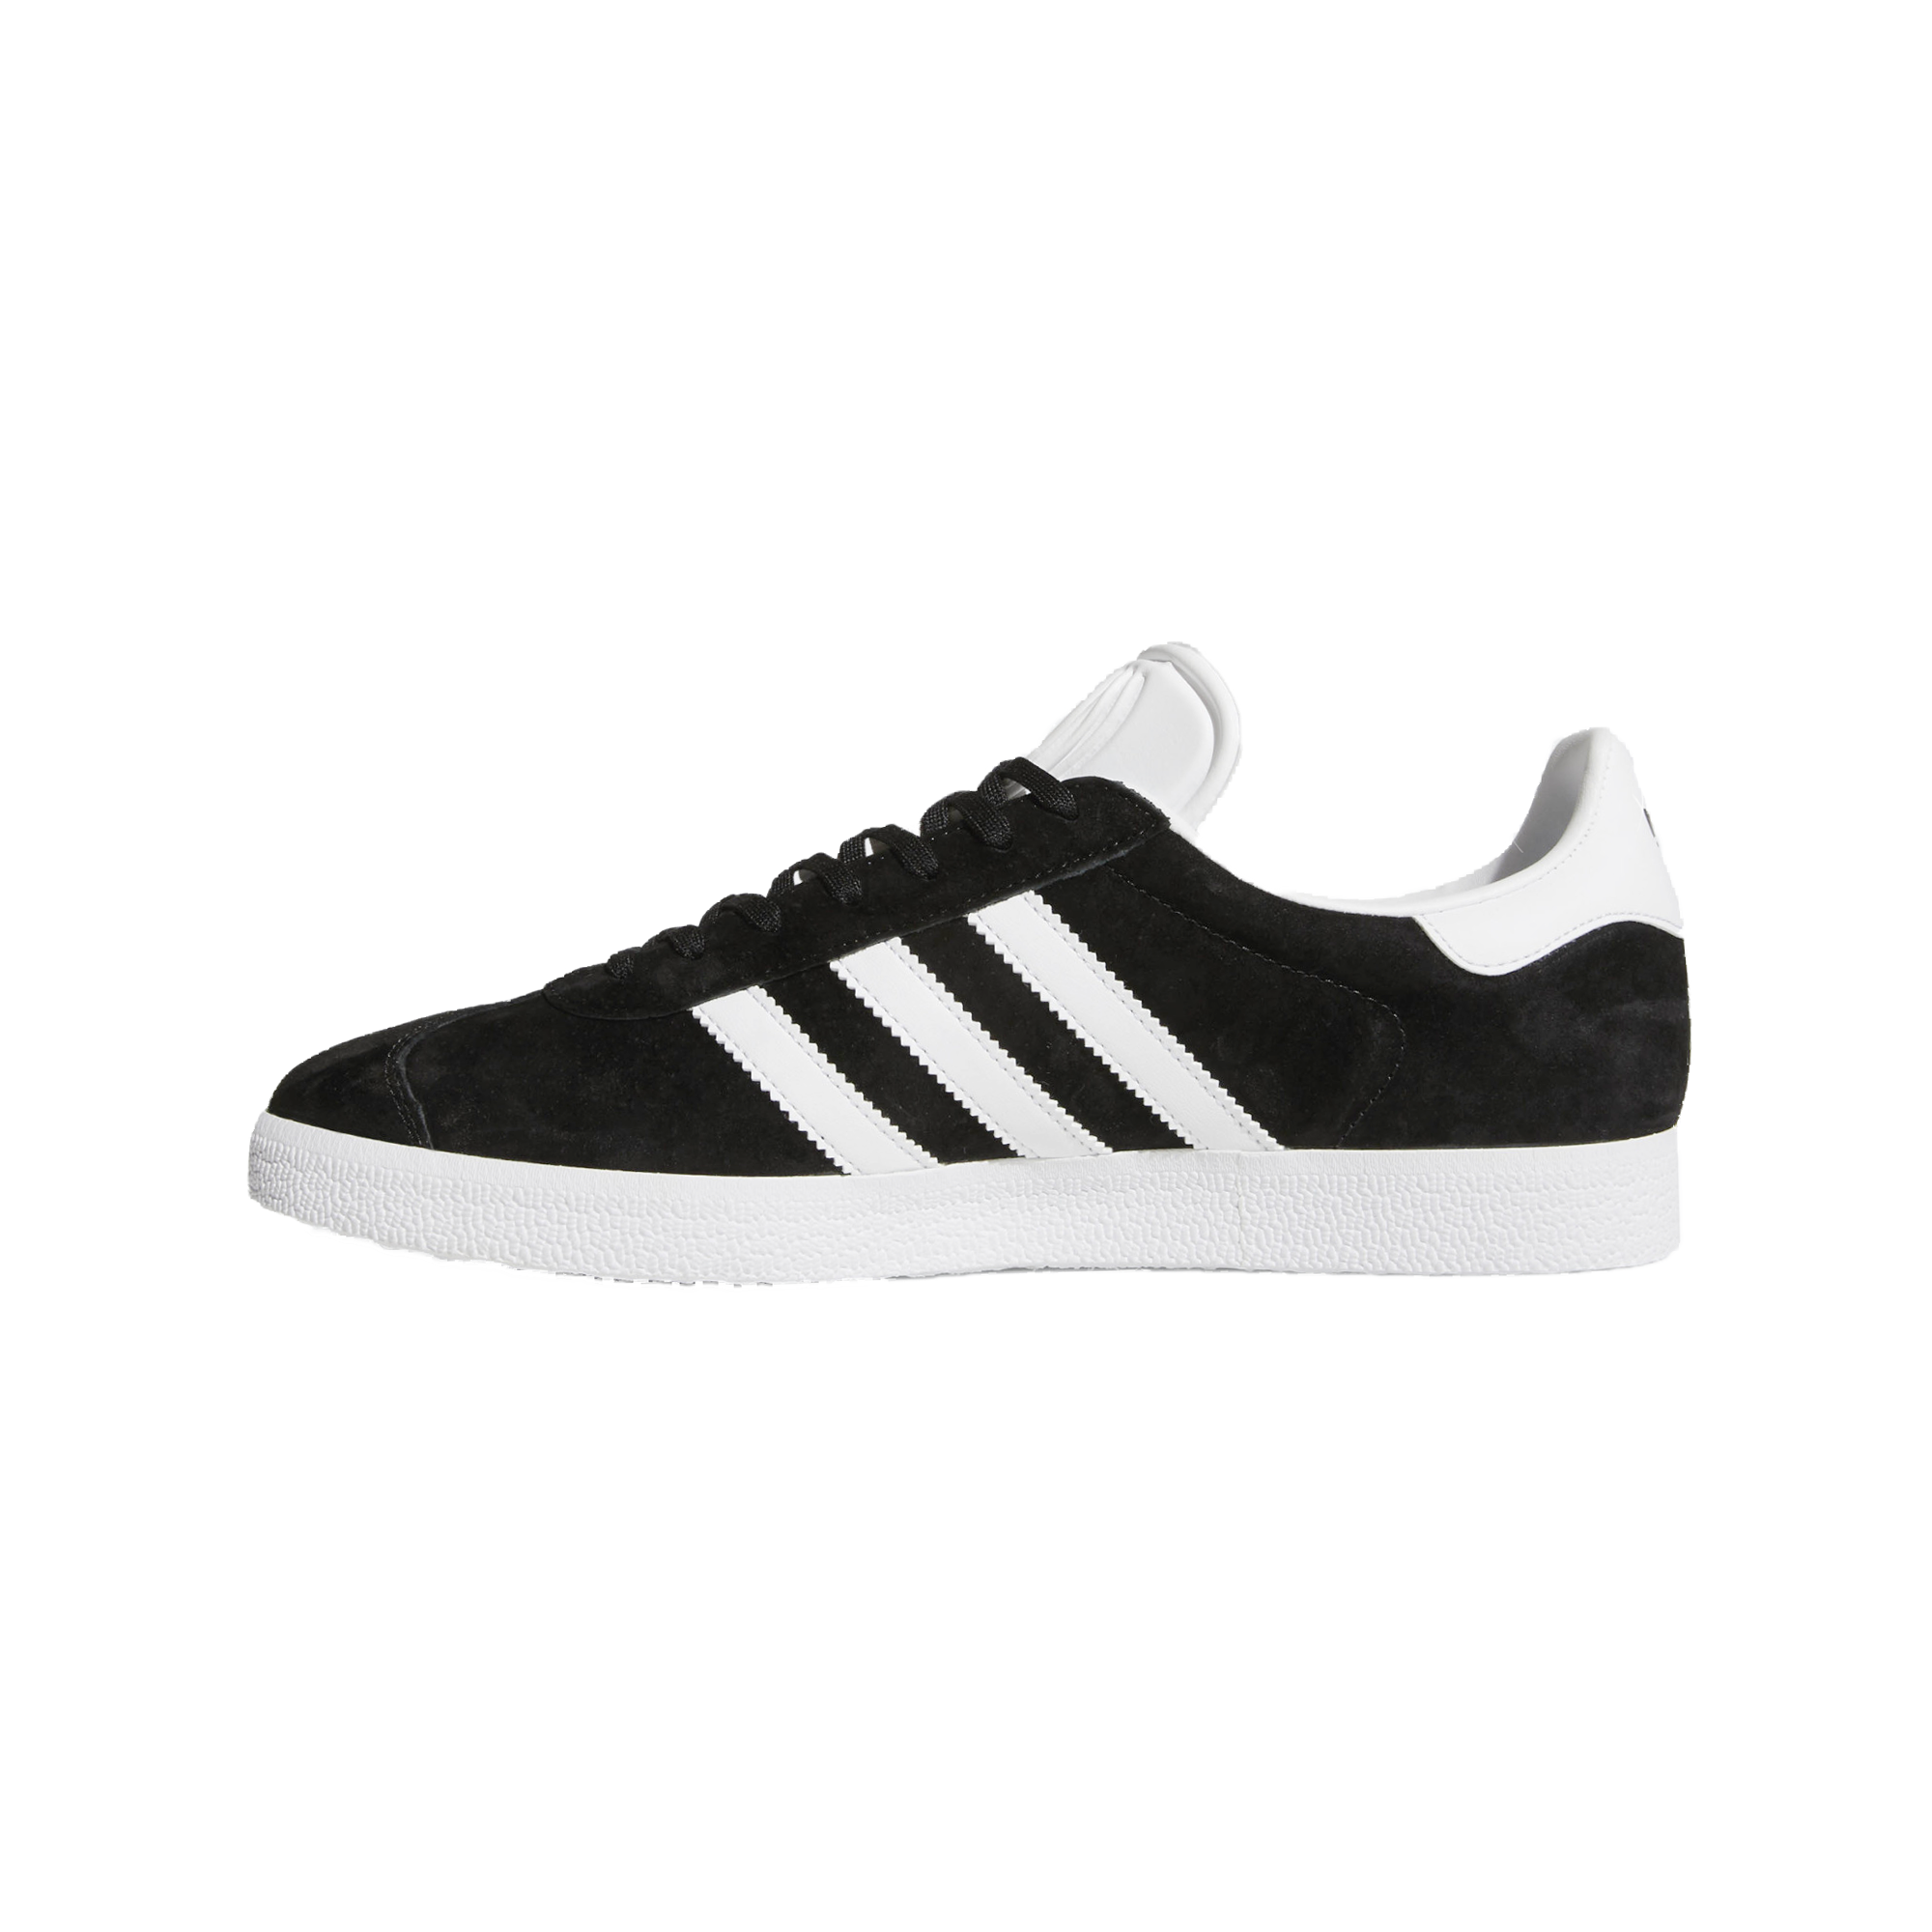 adidas gazelle shoes black